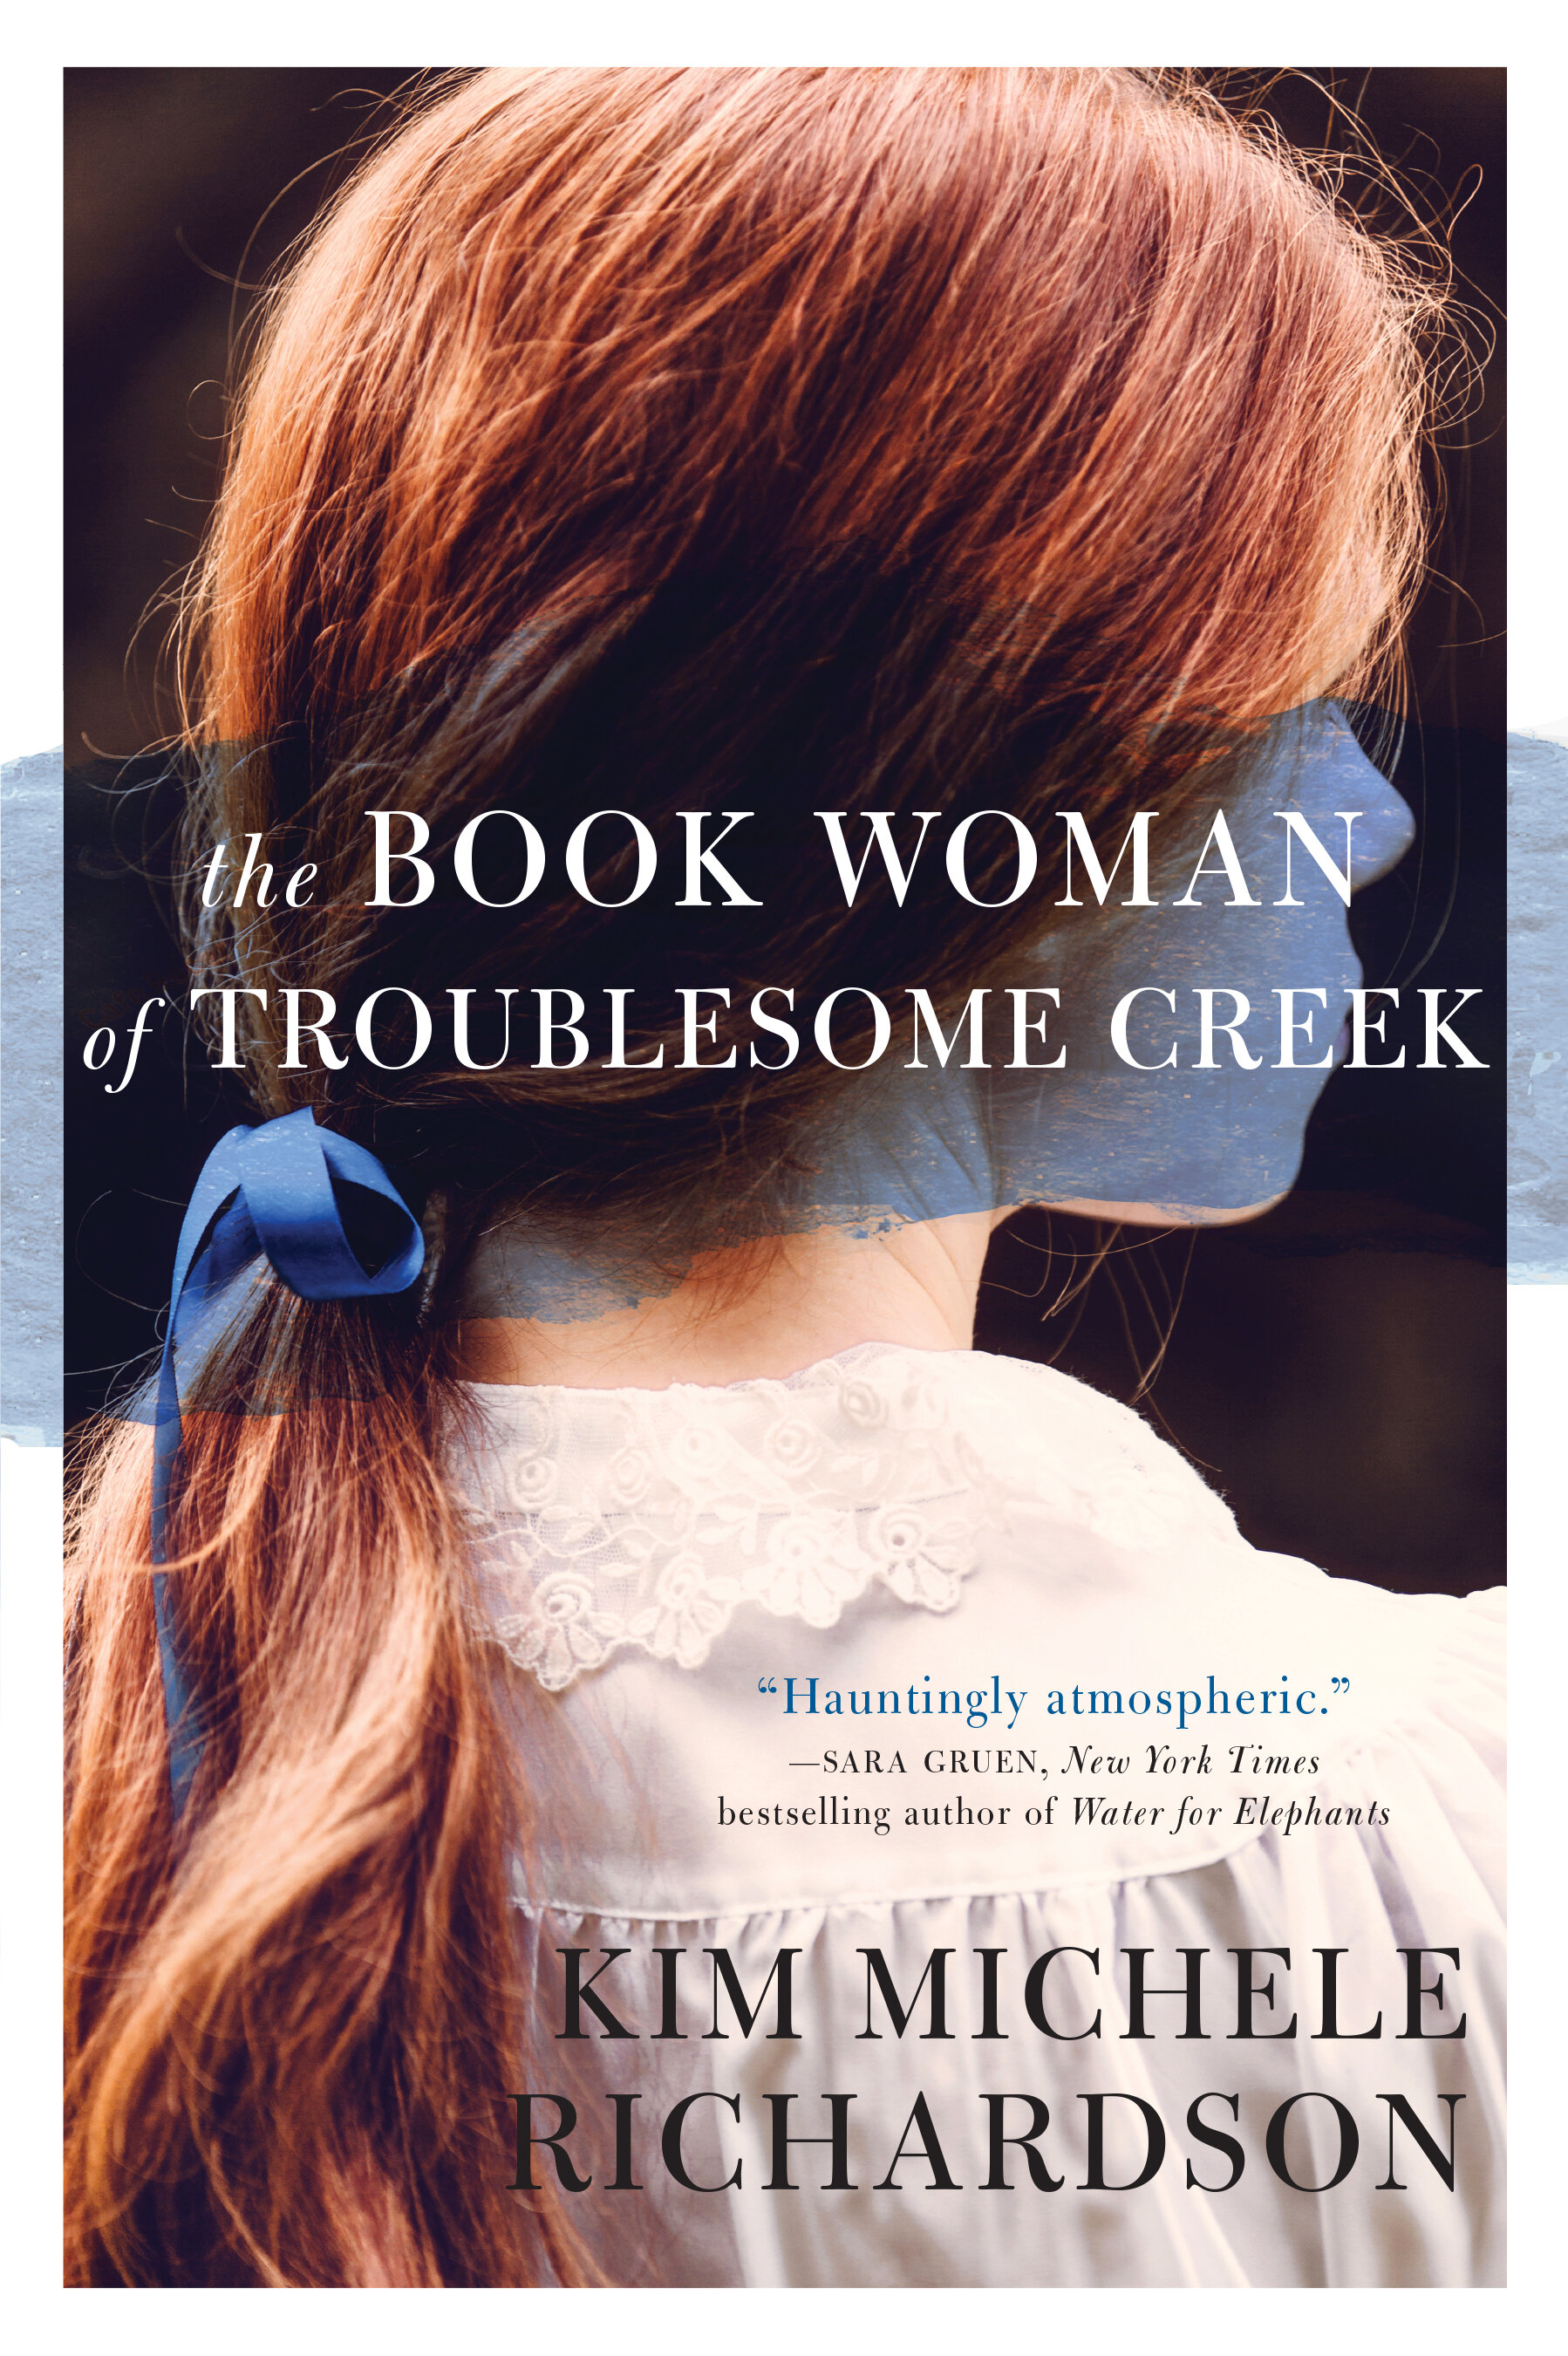 BookWoman_Harper CBG-cover.jpg